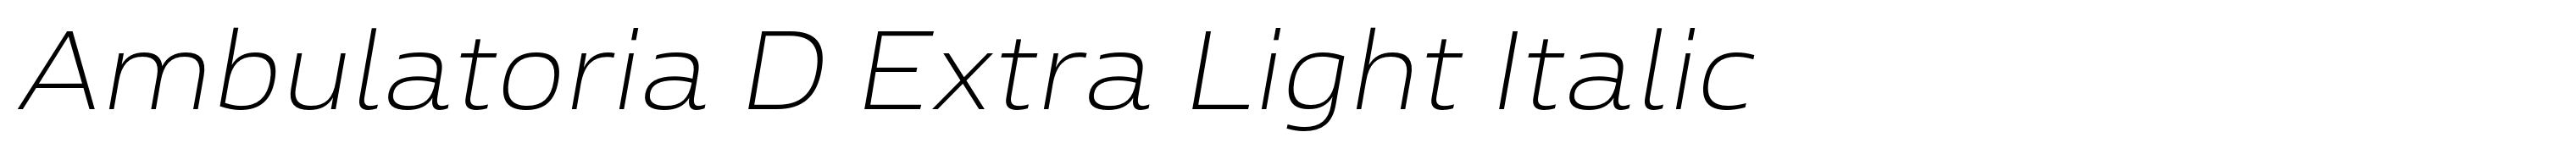 Ambulatoria D Extra Light Italic